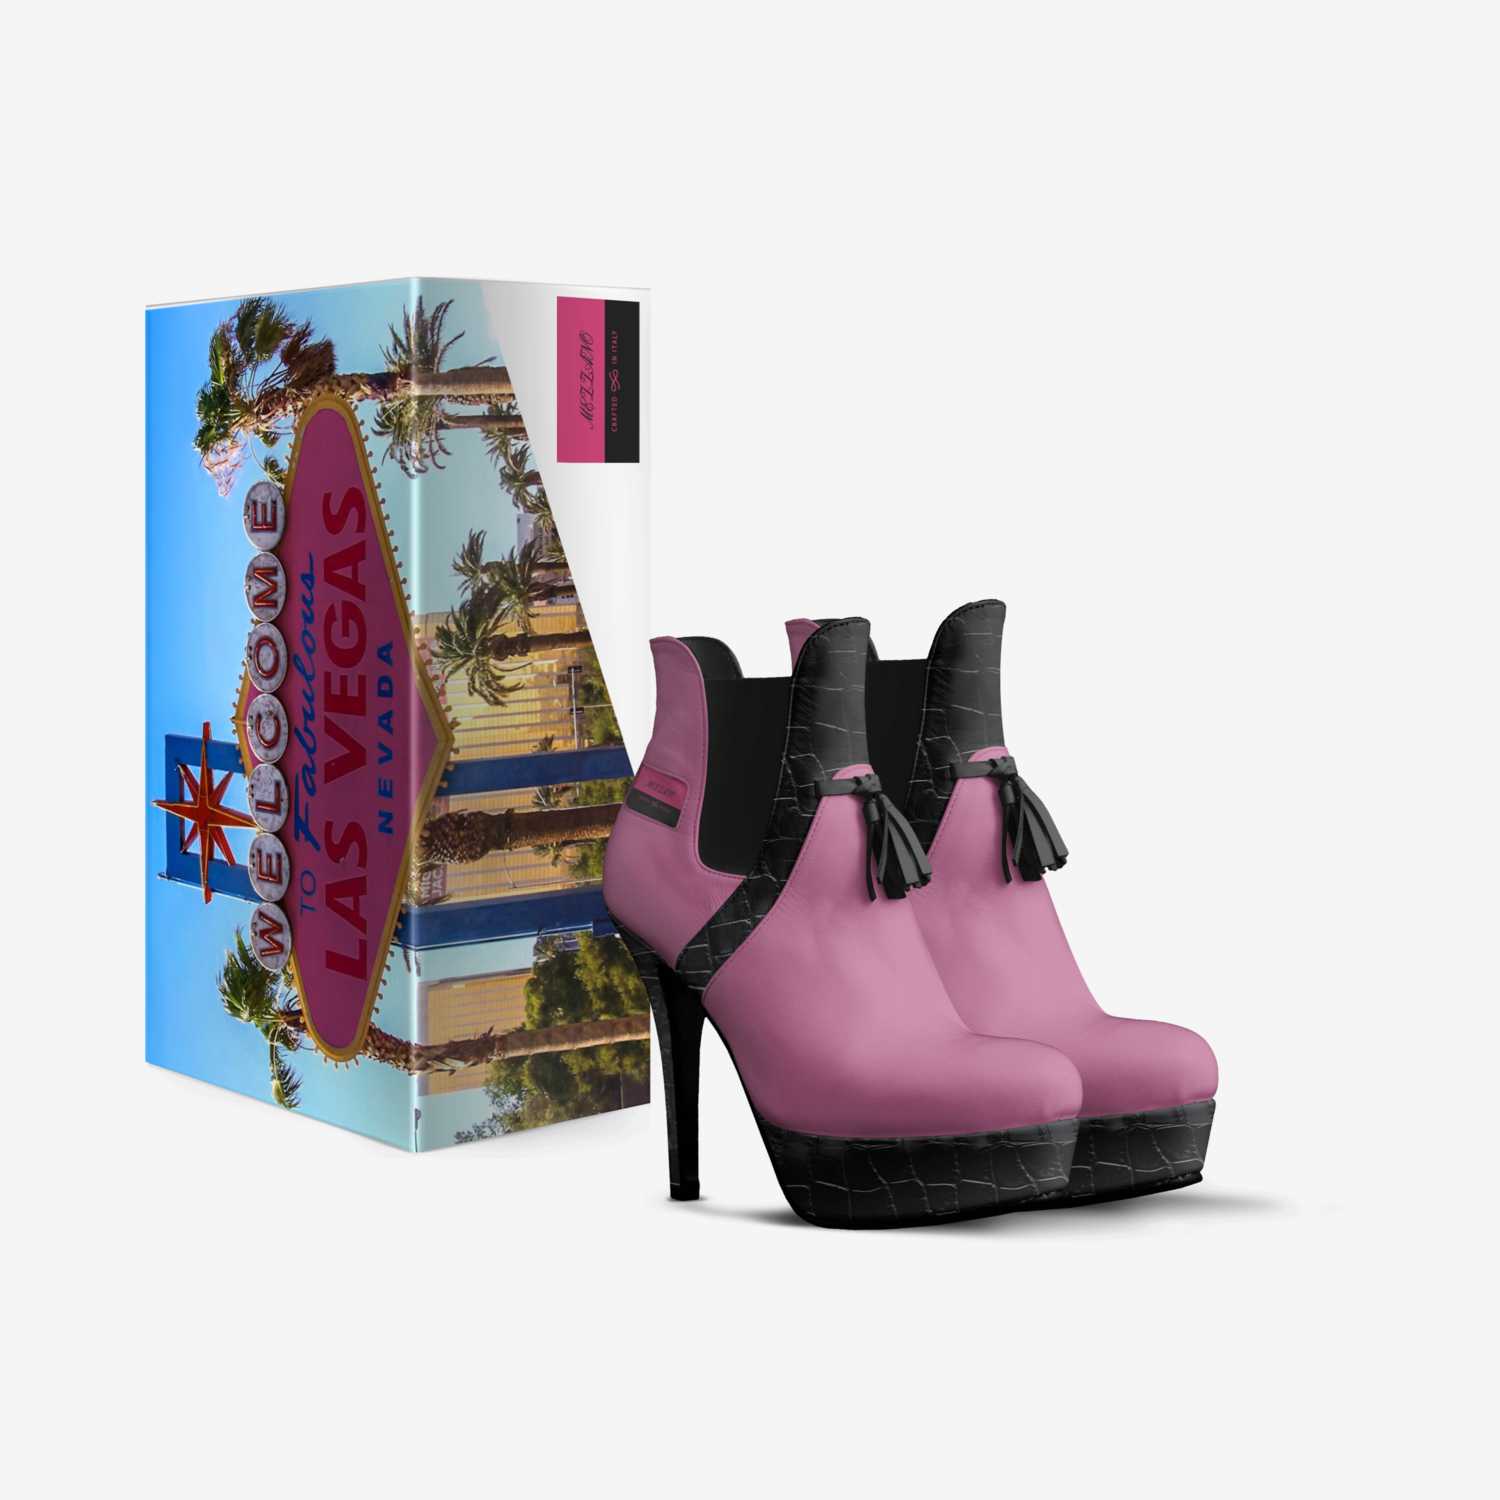 MEZZANO FESTA custom made in Italy shoes by Ray "lefty" Rhodes | Box view